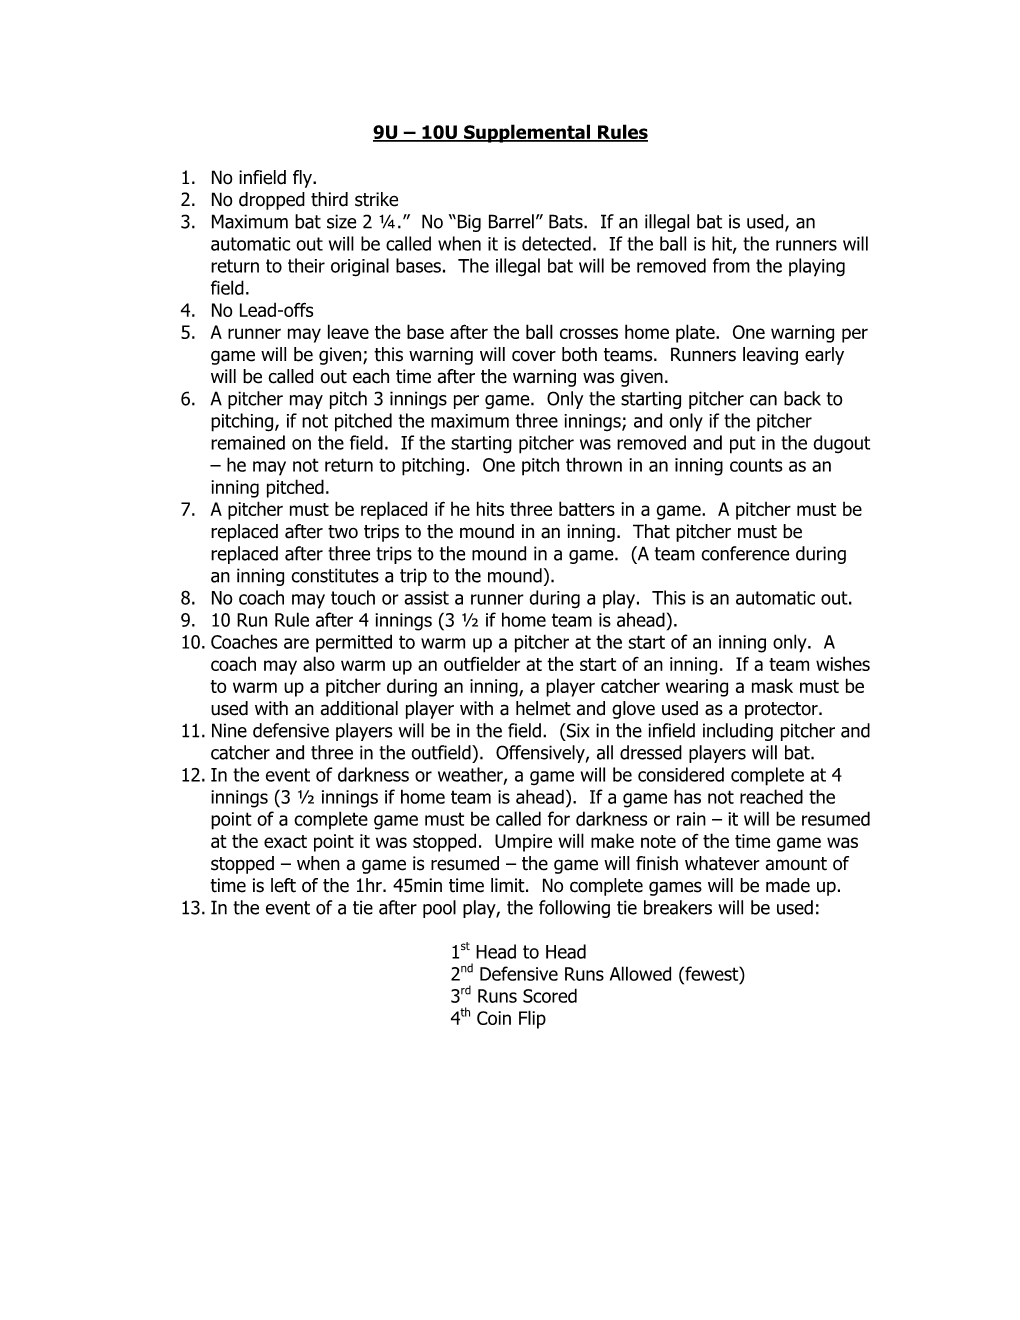 9U – 10U Supplemental Rules 1. No Infield Fly. 2